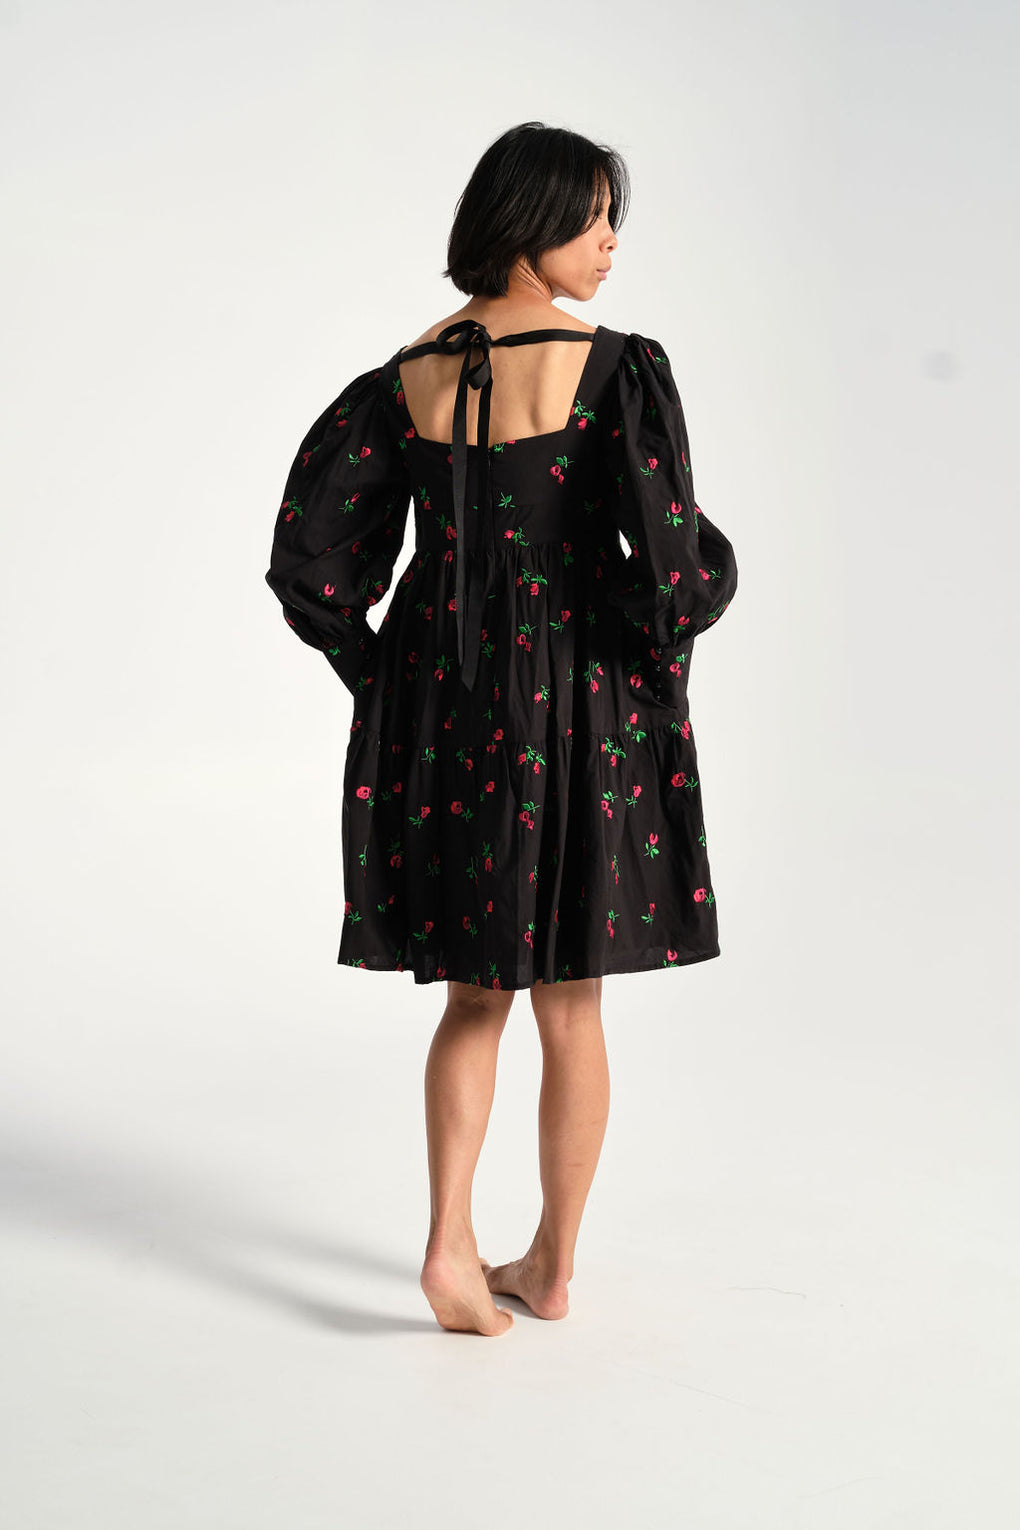 Rachel Antonoff - Christa Empire Dress in Black Rose - Idun - St. Paul